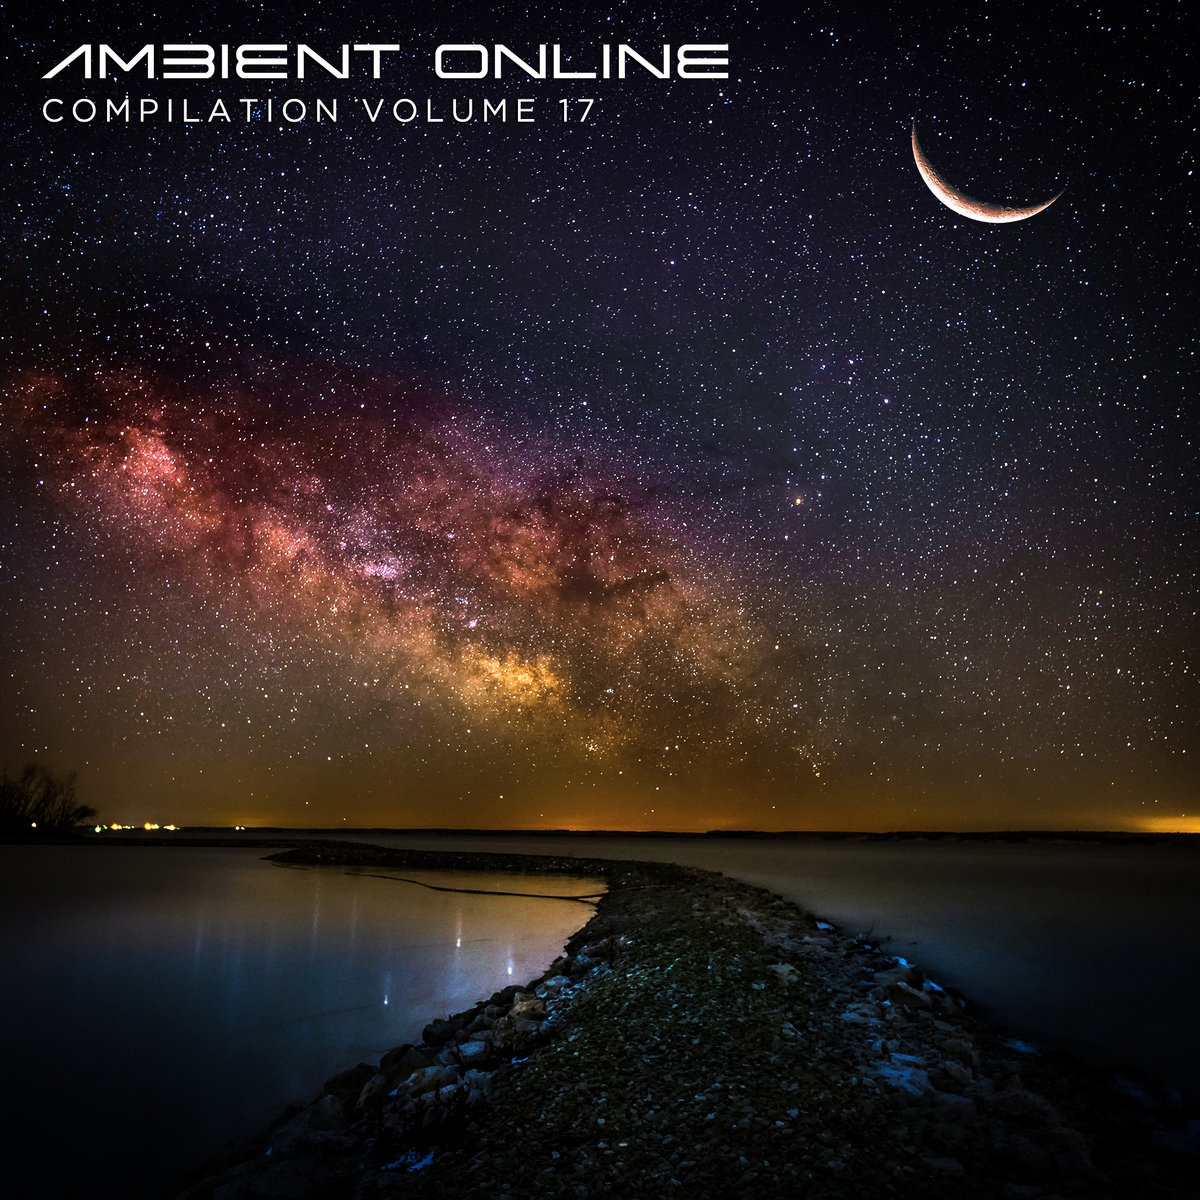 Ambient Online Compilation Volume 17.jpg